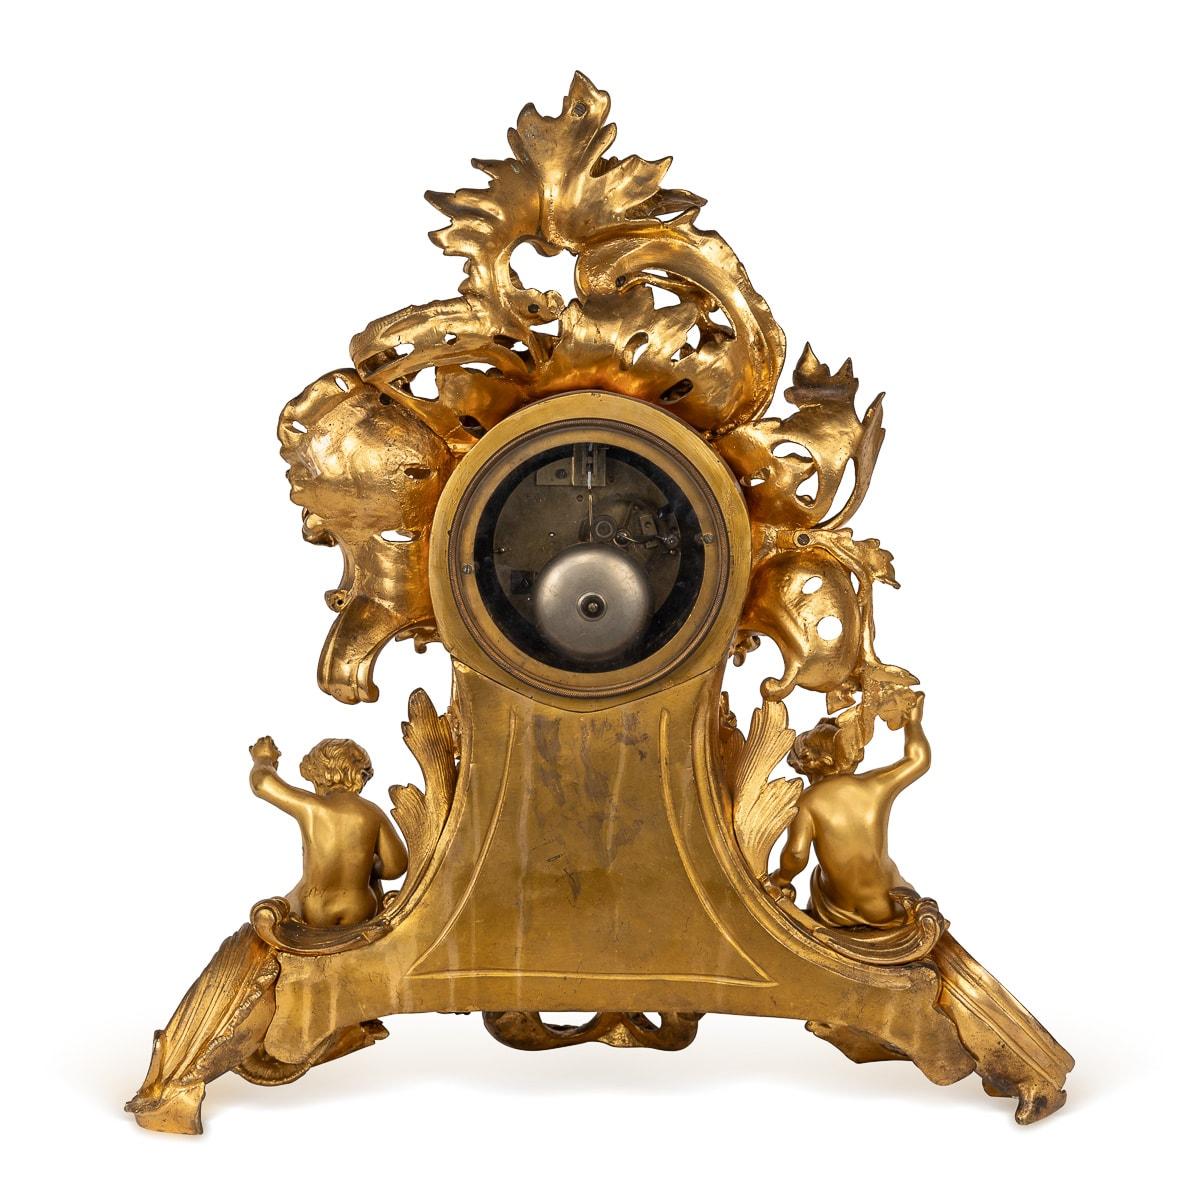 Other Antique 19th Century French Gilt Bronze Clock, Raingo Freres, Paris c.1850 For Sale